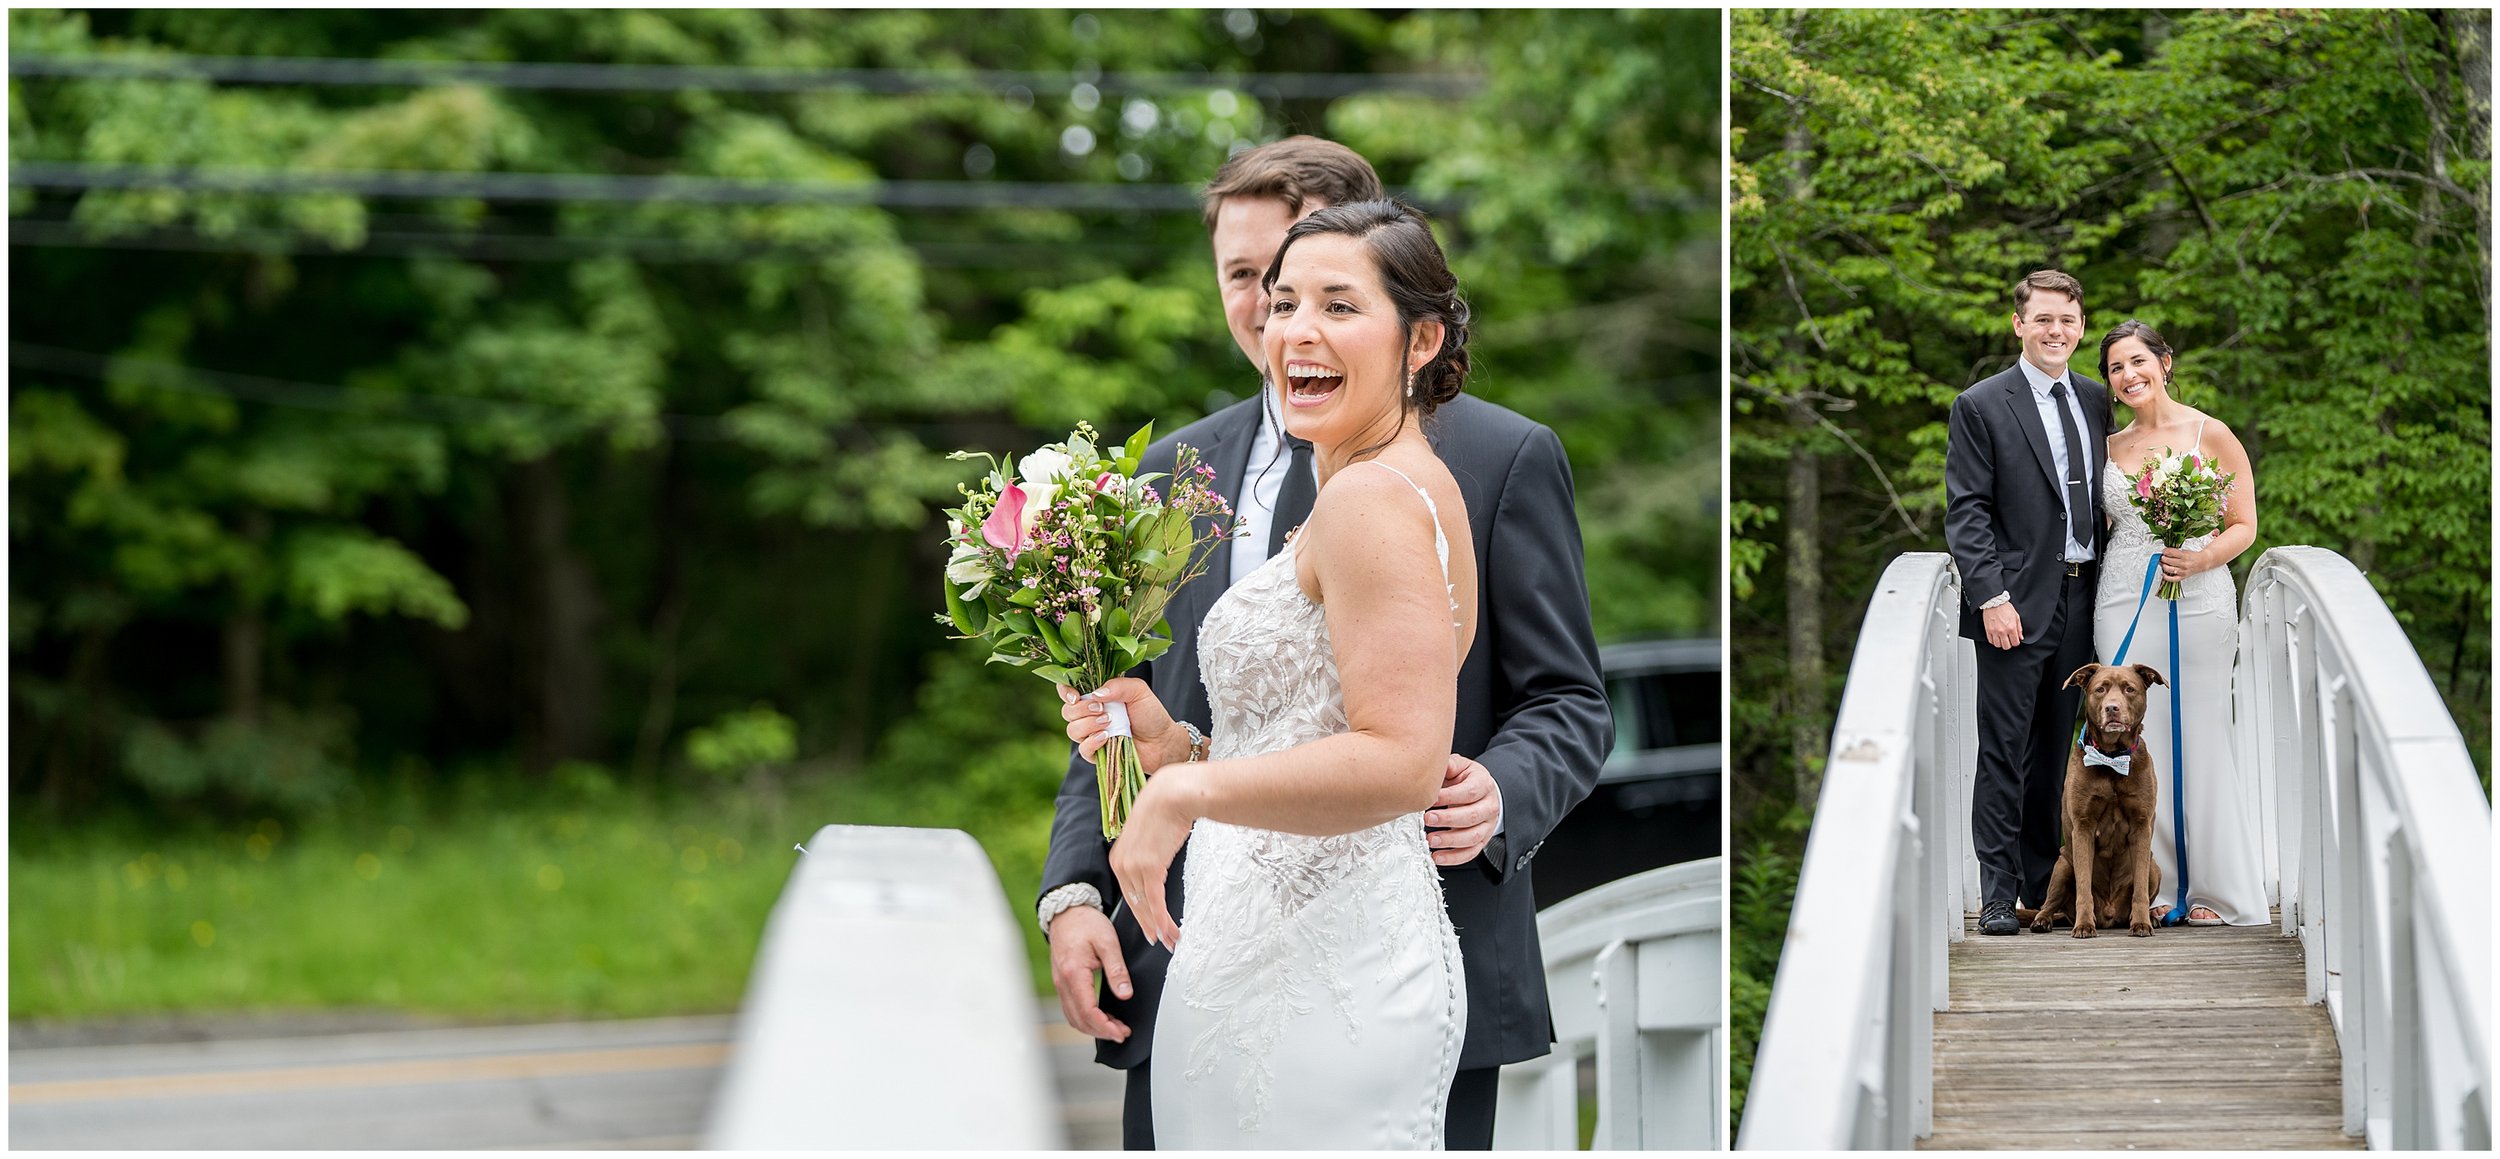 Bar Harbor Maine Wedding Photographers, Acadia National Park Wedding Photographer, Two Adventurous Souls- 061523_0011.jpg